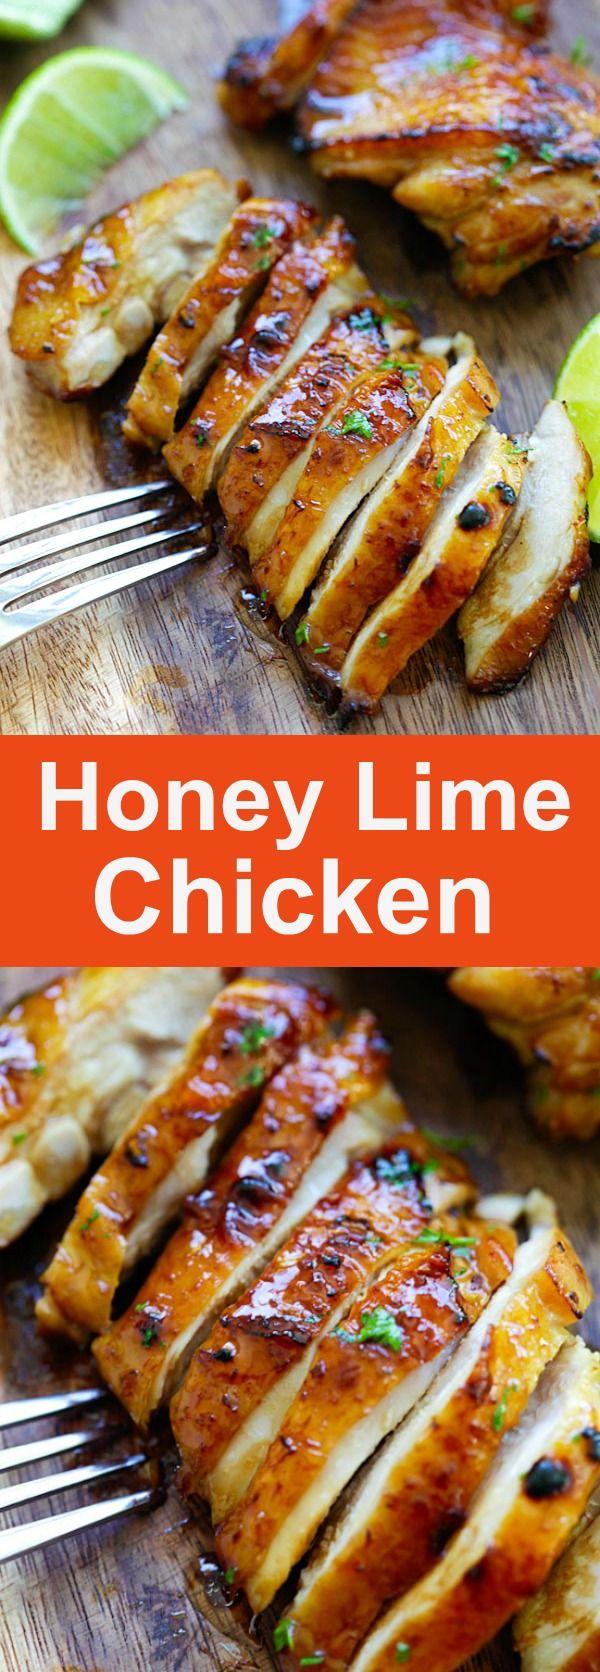 Food & Favor - Honey Lime Chicken #2532997 - Weddbook